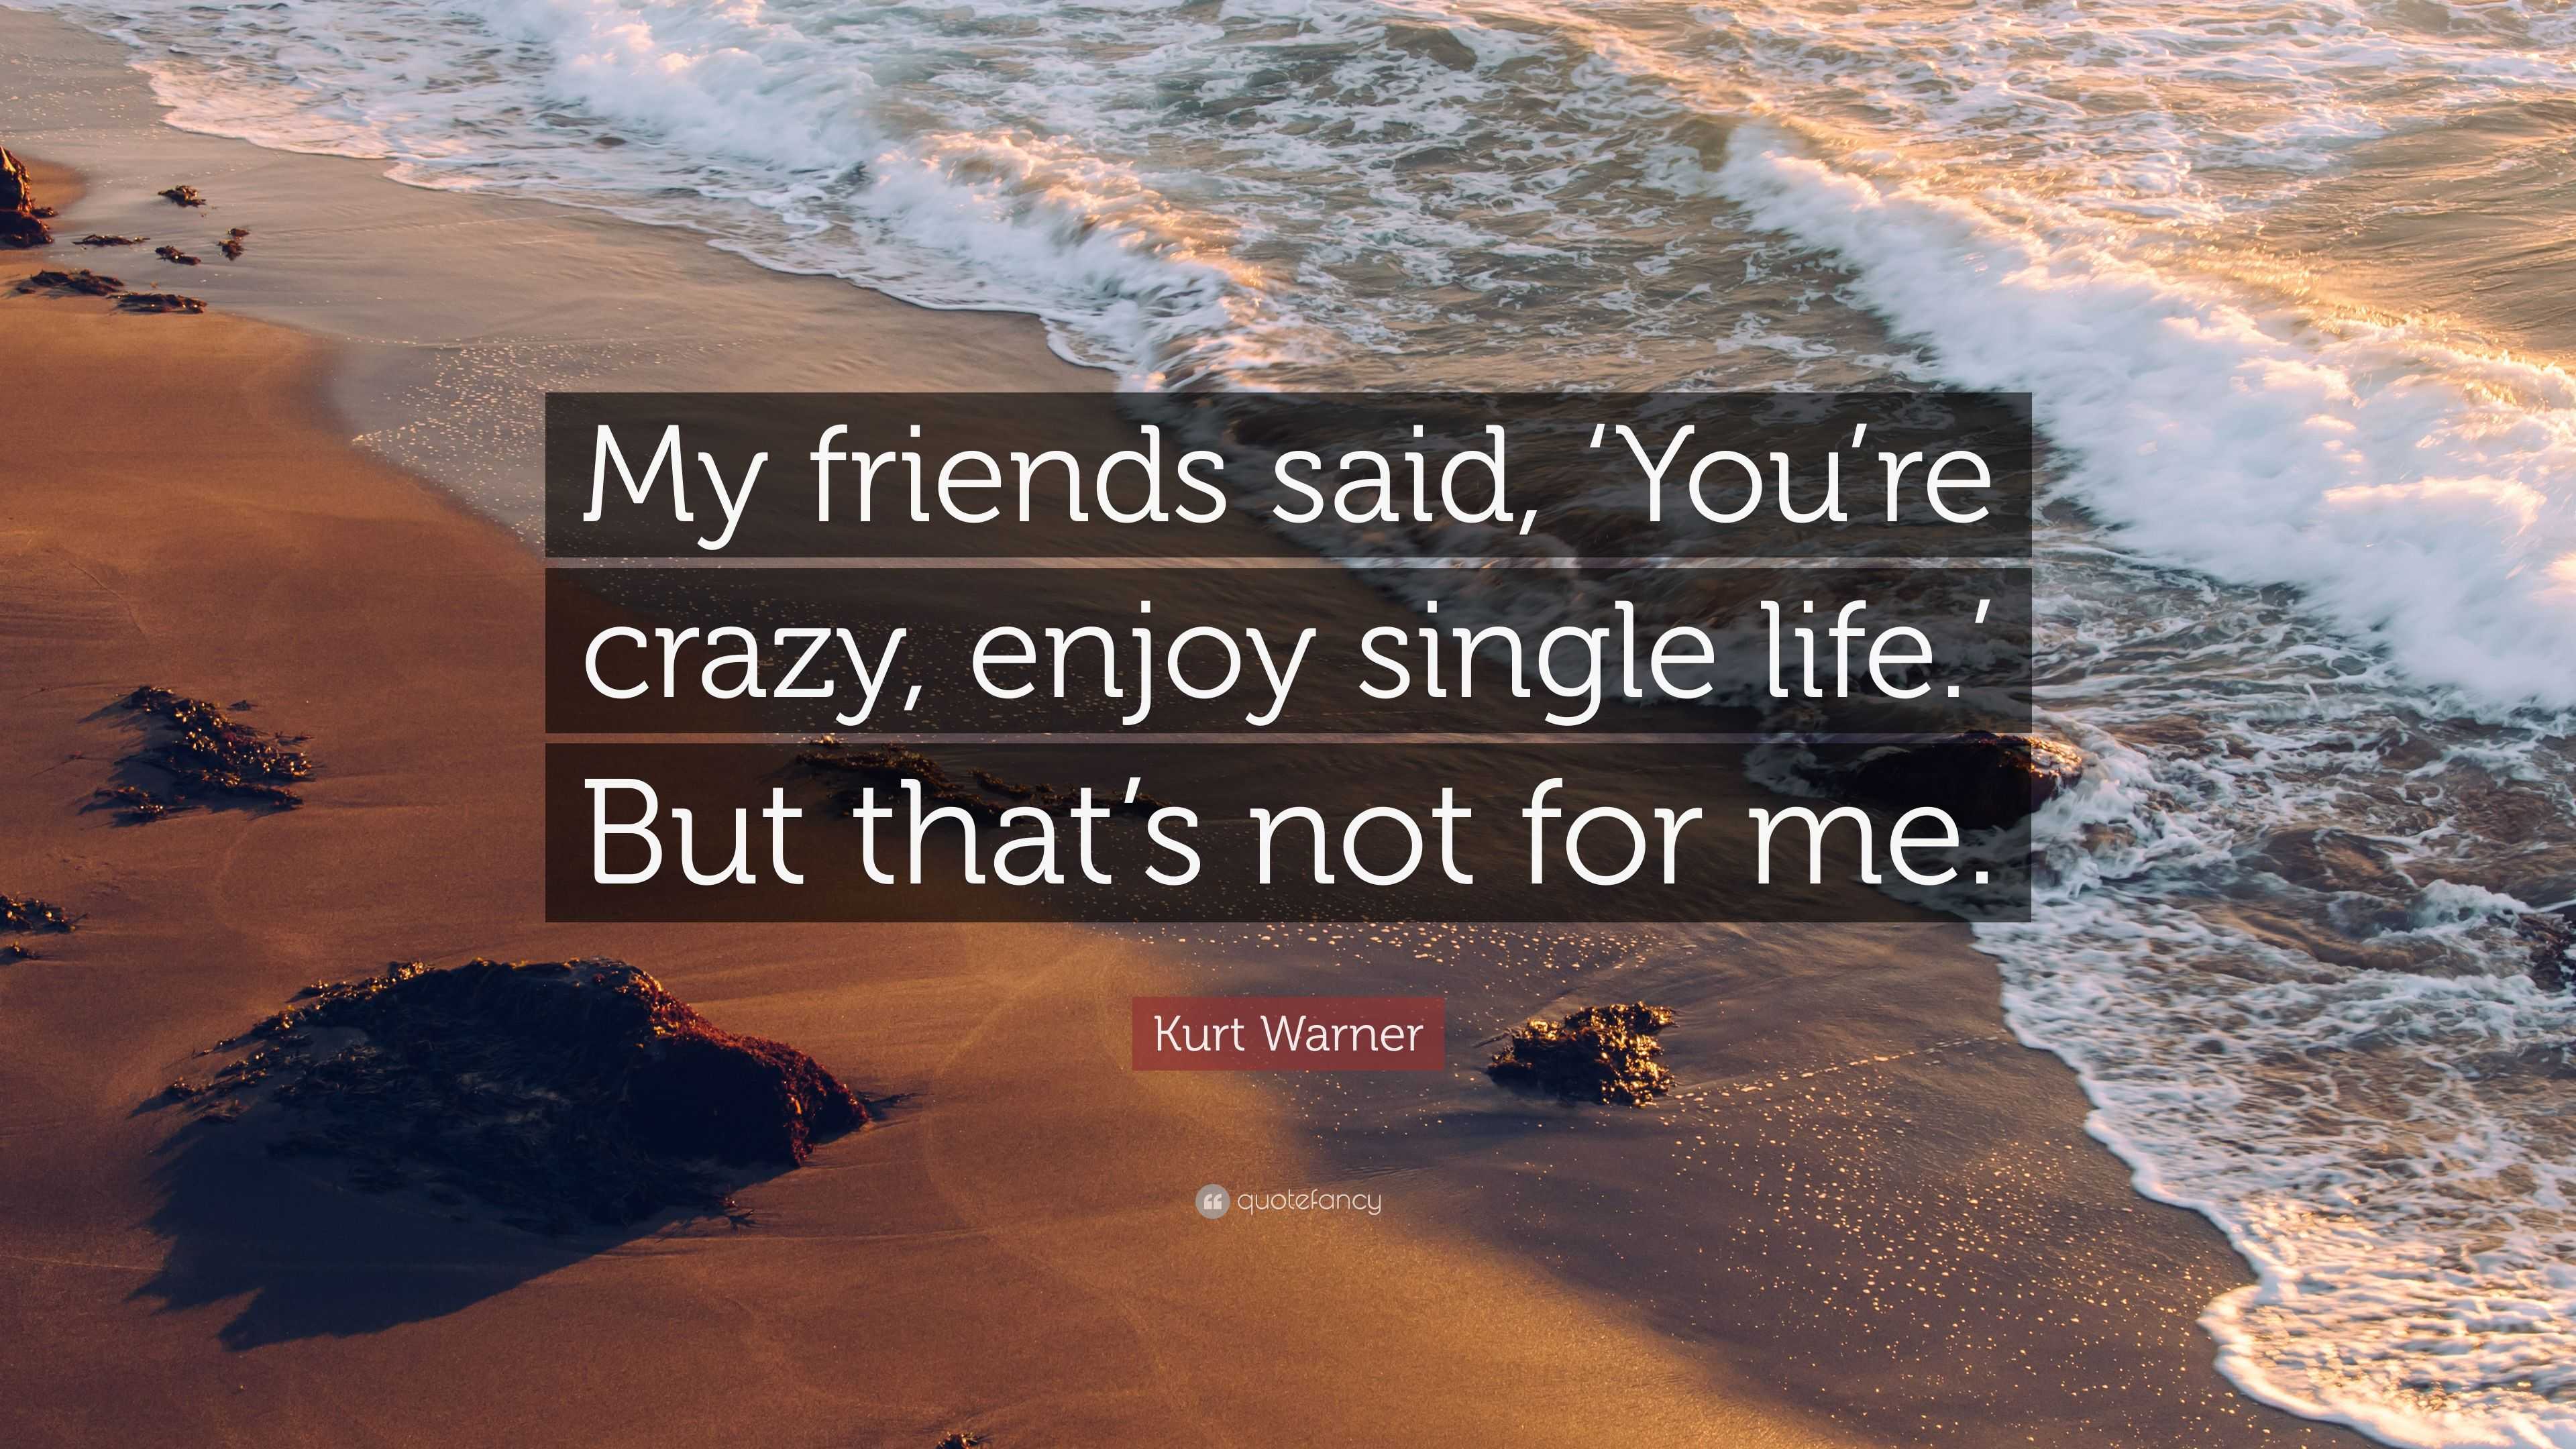 Kurt Warner Quote “My friends said You re crazy enjoy